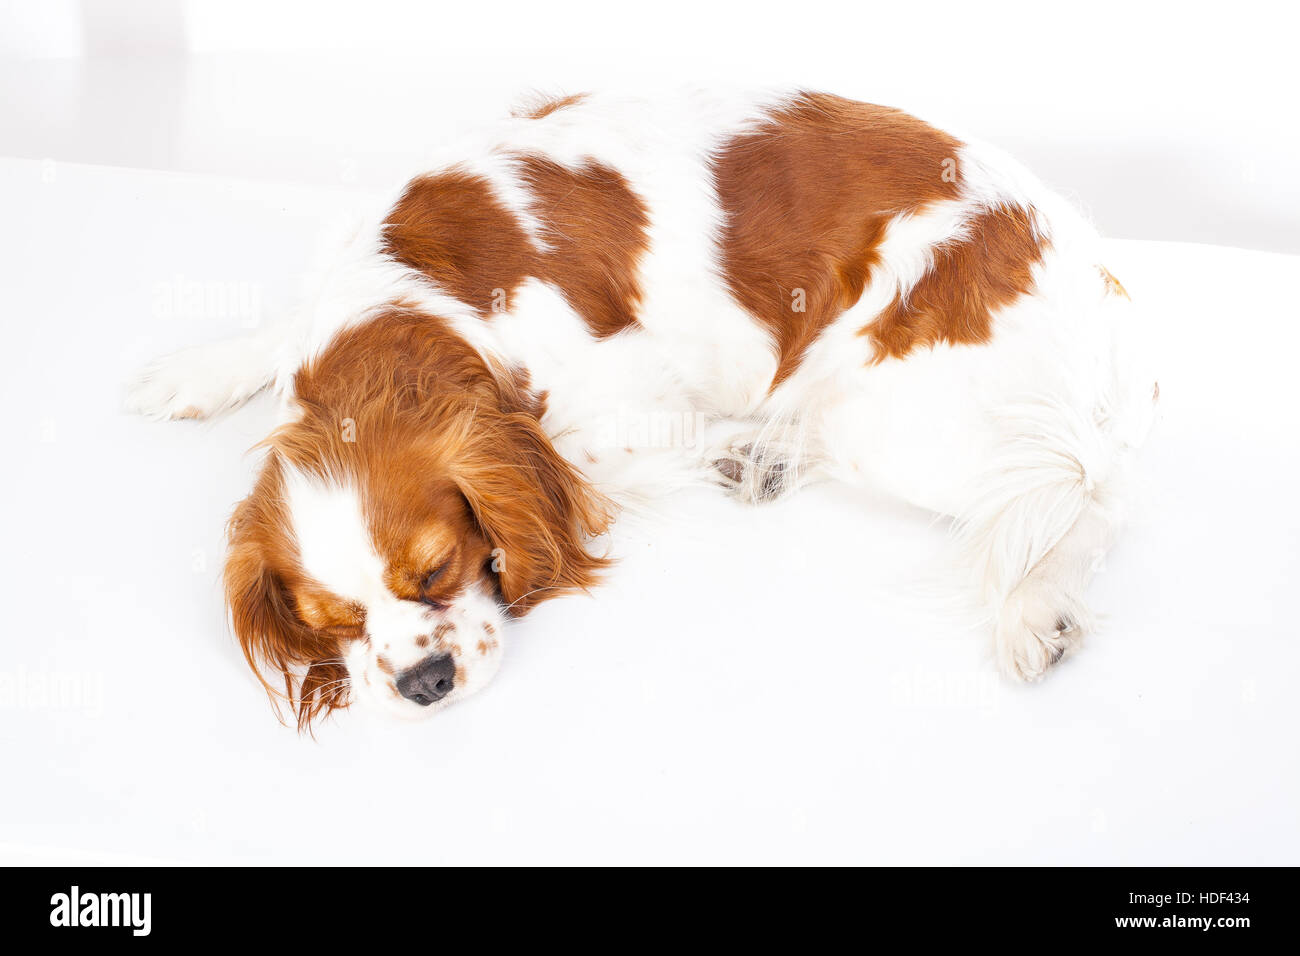 Sleeping dog. Dog sleeping in studio king charles spaniel. White background. cavalier king charles spaniel sleep. Stock Photo